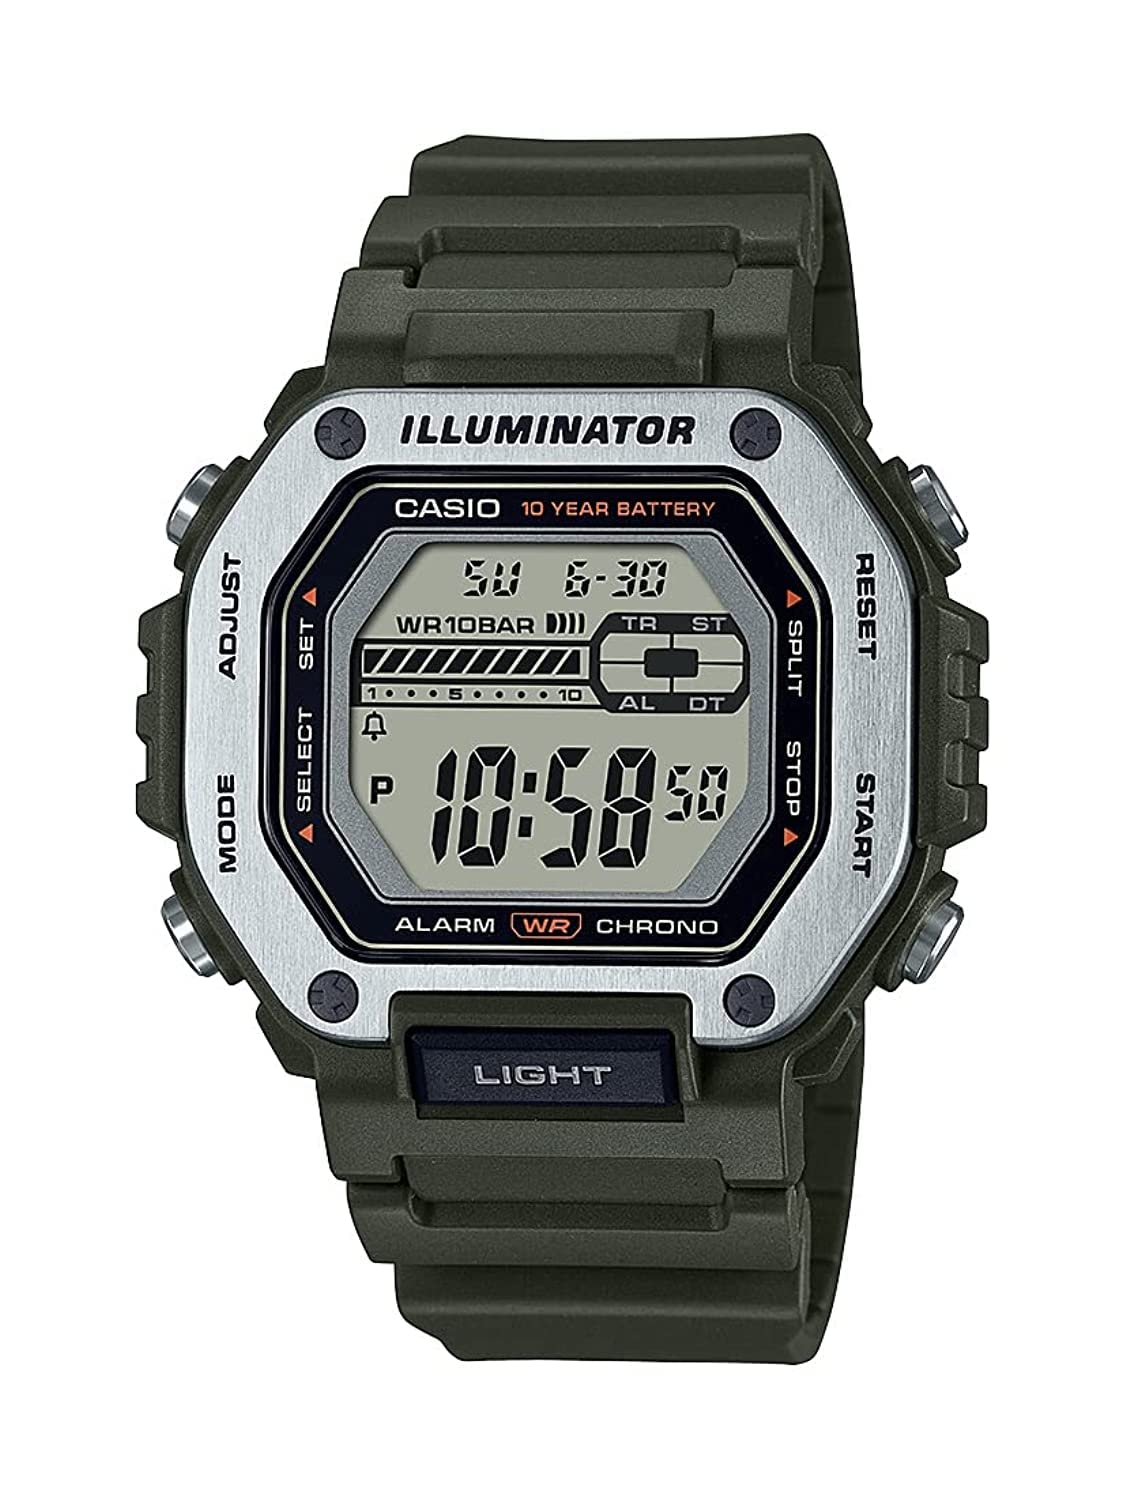 Casio LED Illuminator 10-Year Battery 1/100 Second Stop Watch | Daily Alarm Men's Watch MWD-110H-3AV